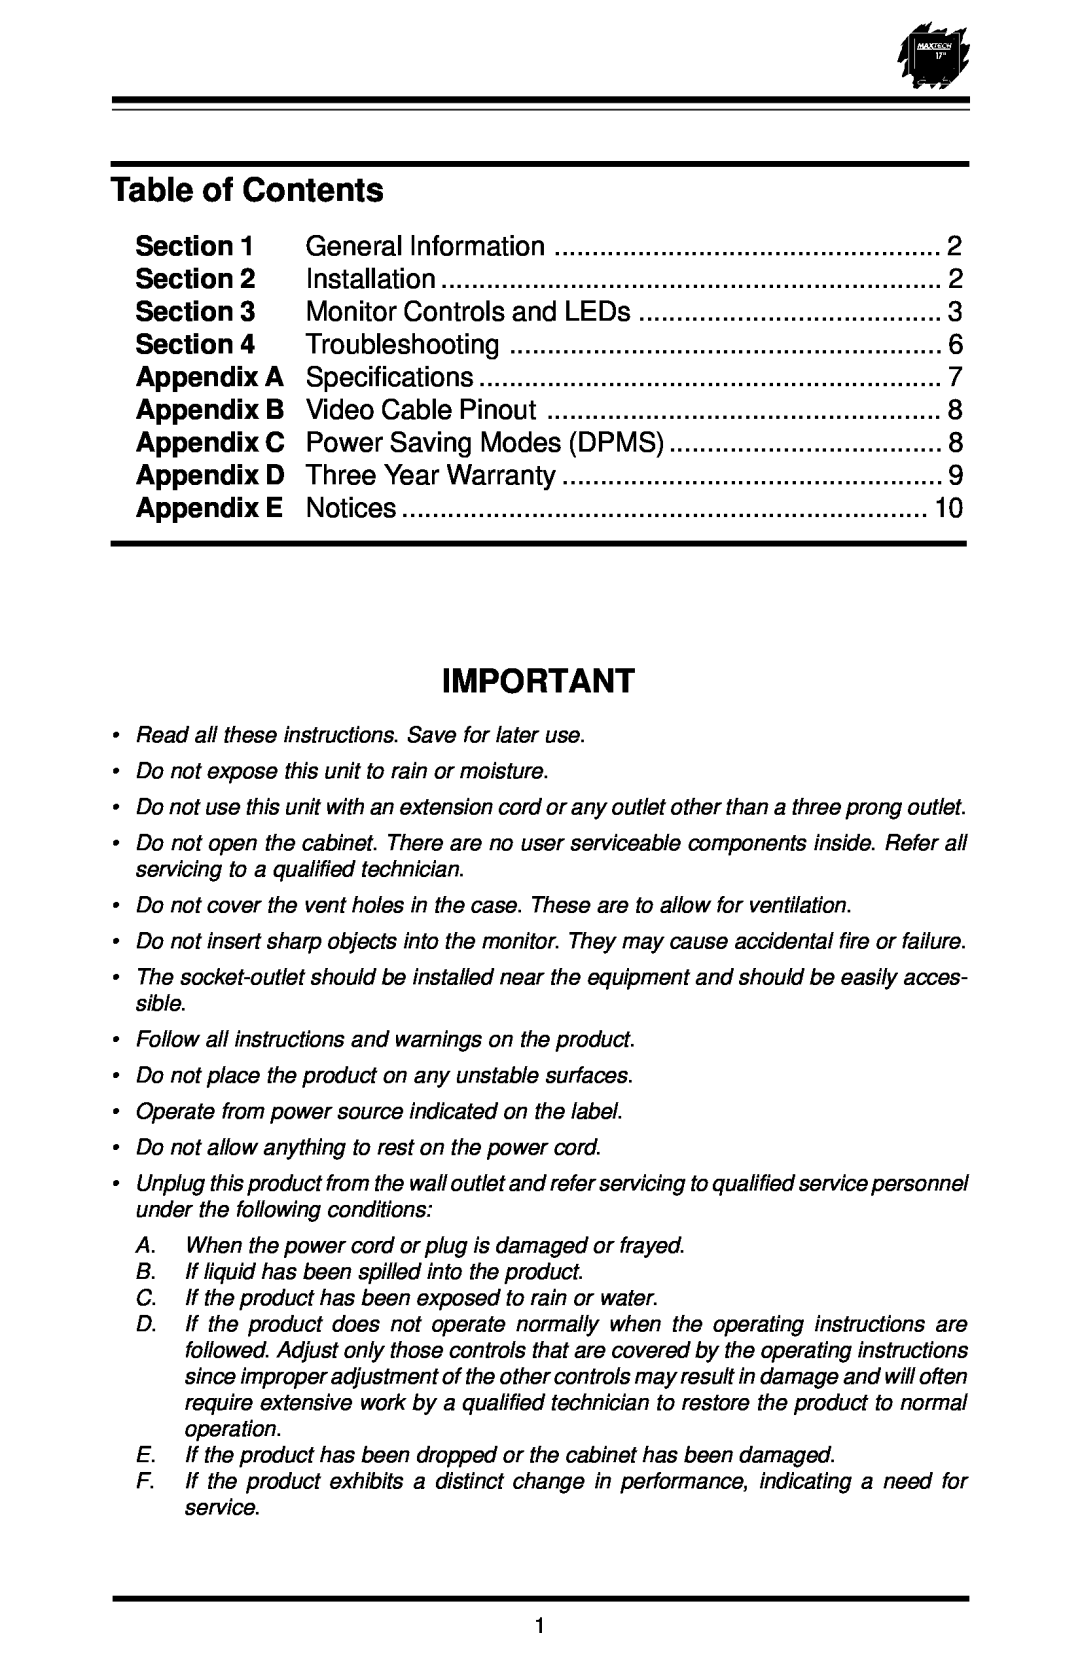 MaxTech XT-7871 user manual Table of Contents, Section, Appendix A, Appendix D, Appendix E 